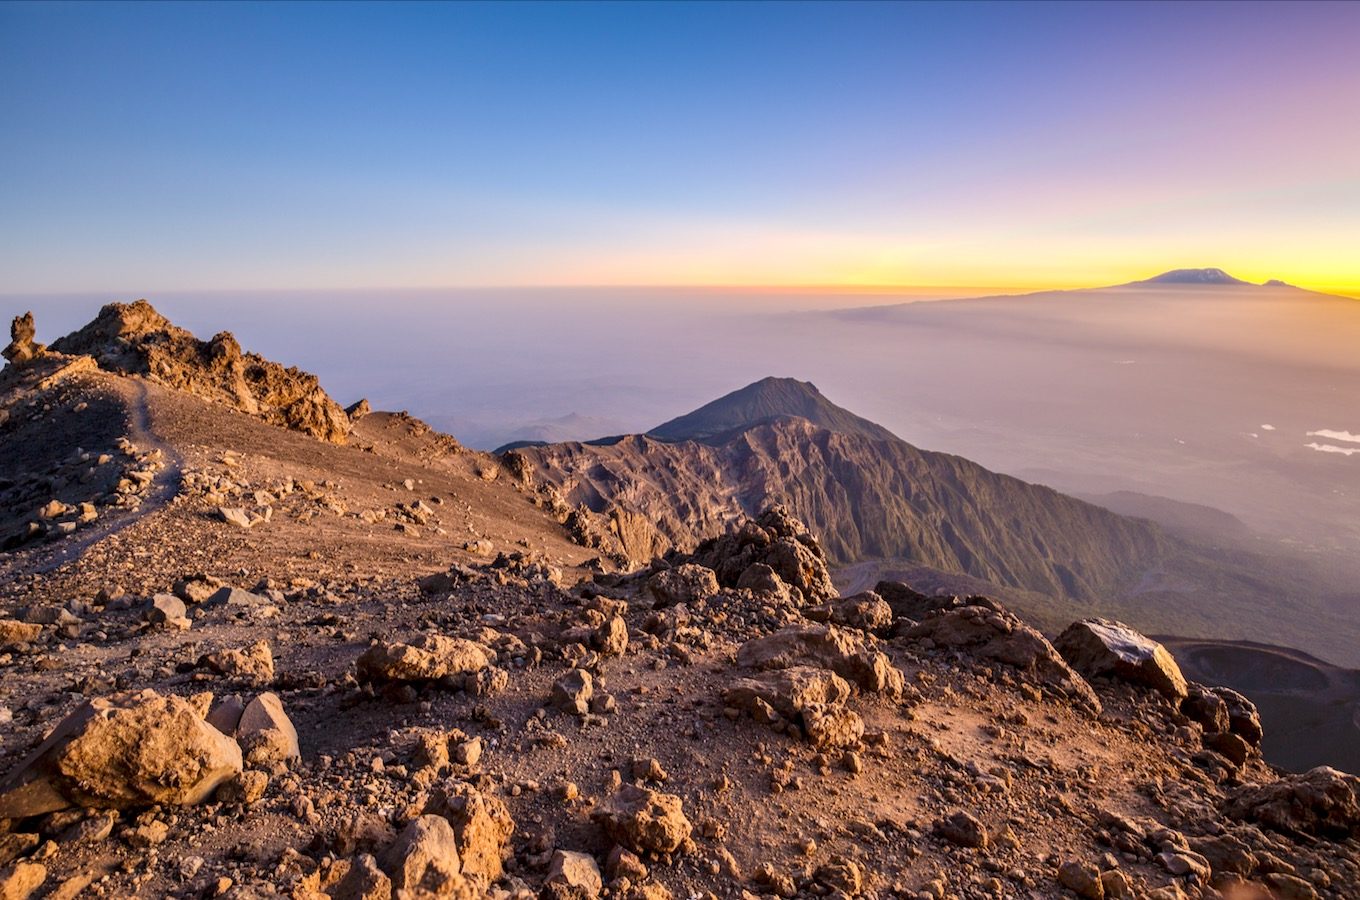 Sunrise at Mount Meru